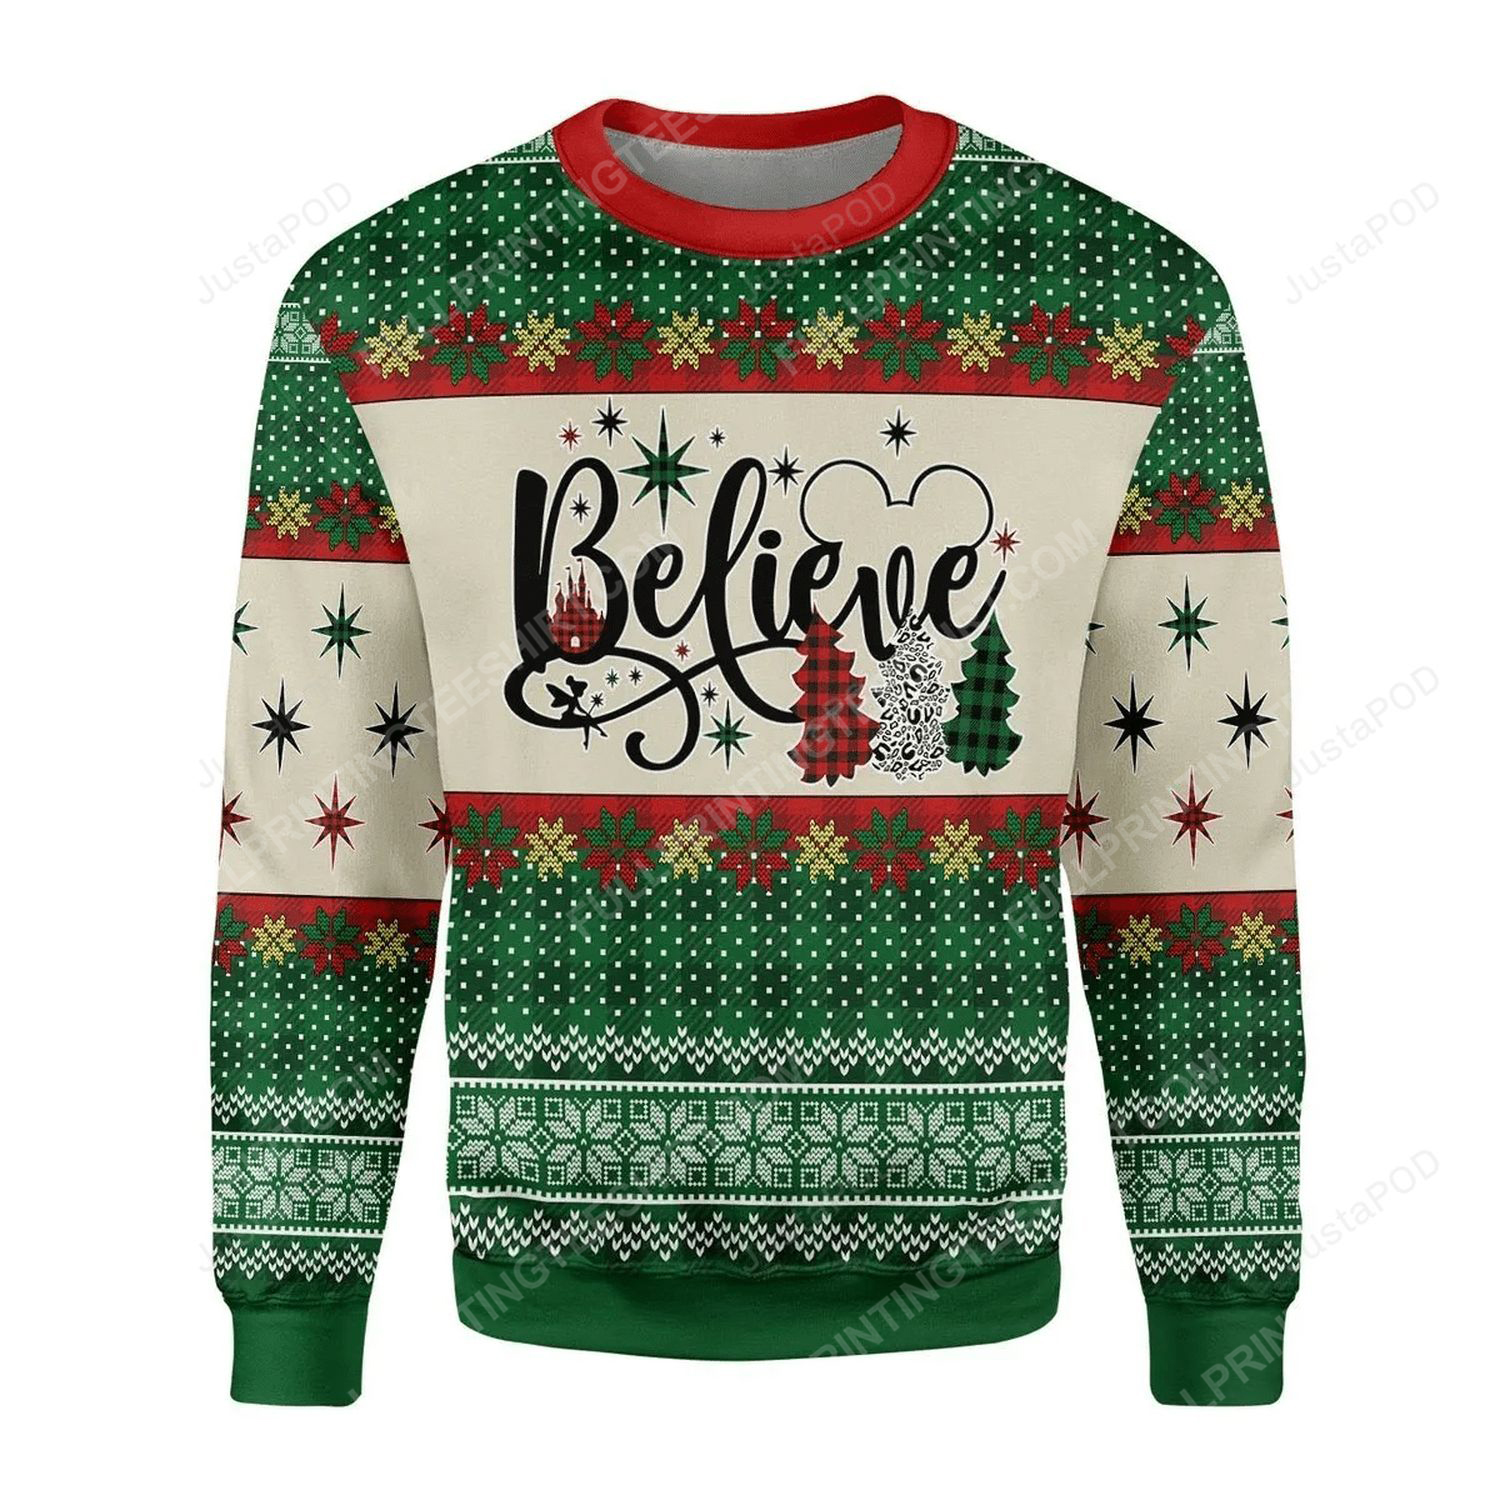 Believe christmas tree christmas gift ugly christmas sweater